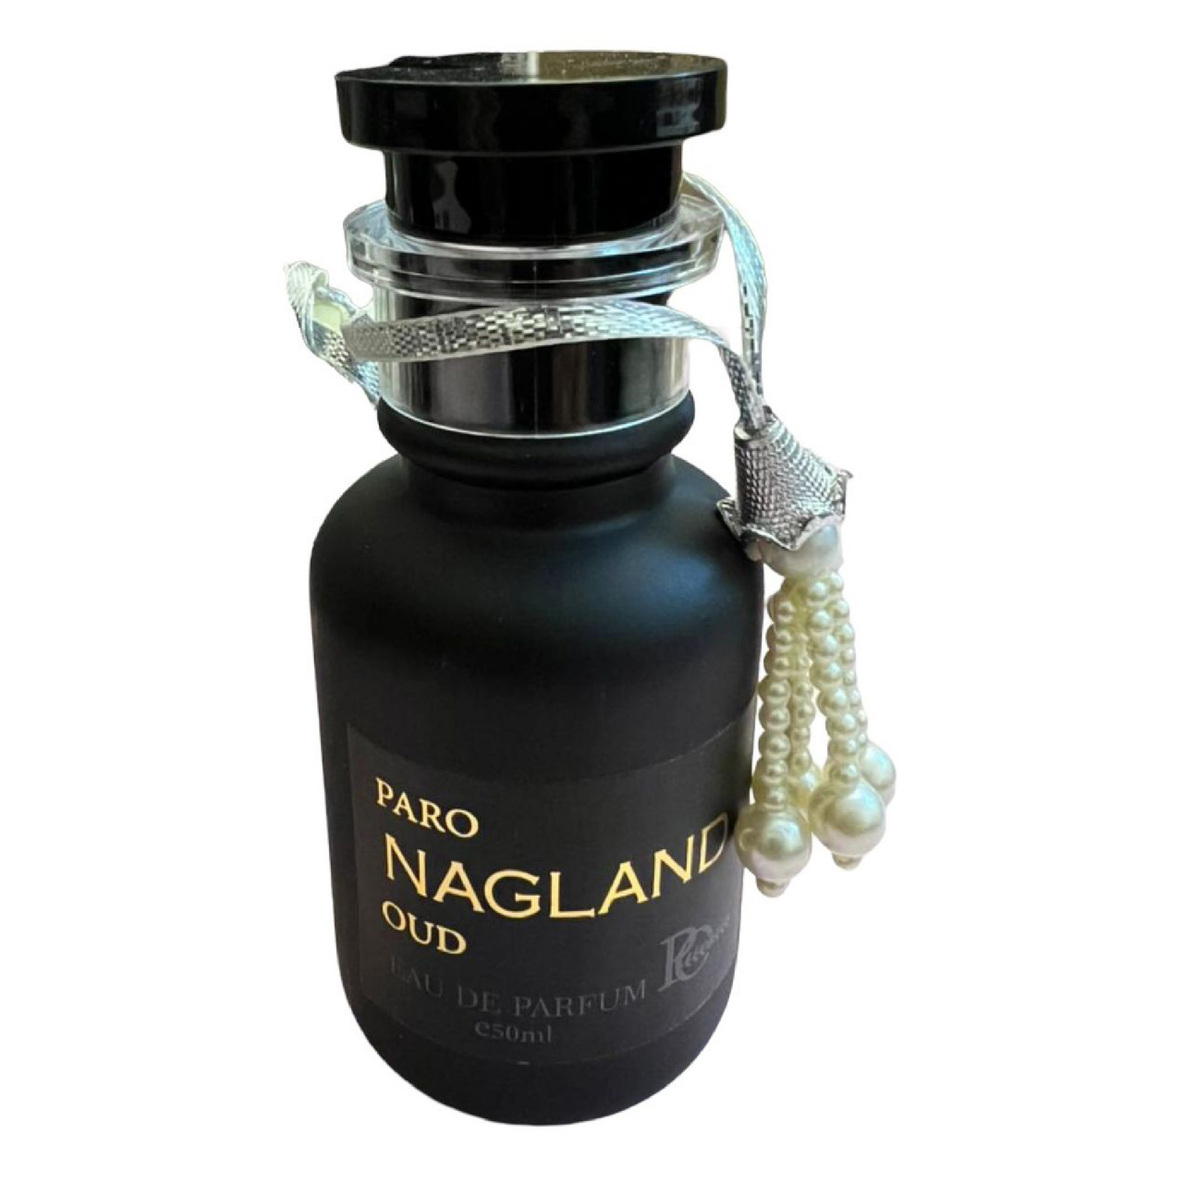 Paro Oud Paro Nagland Eau De Parfum, 50 ml